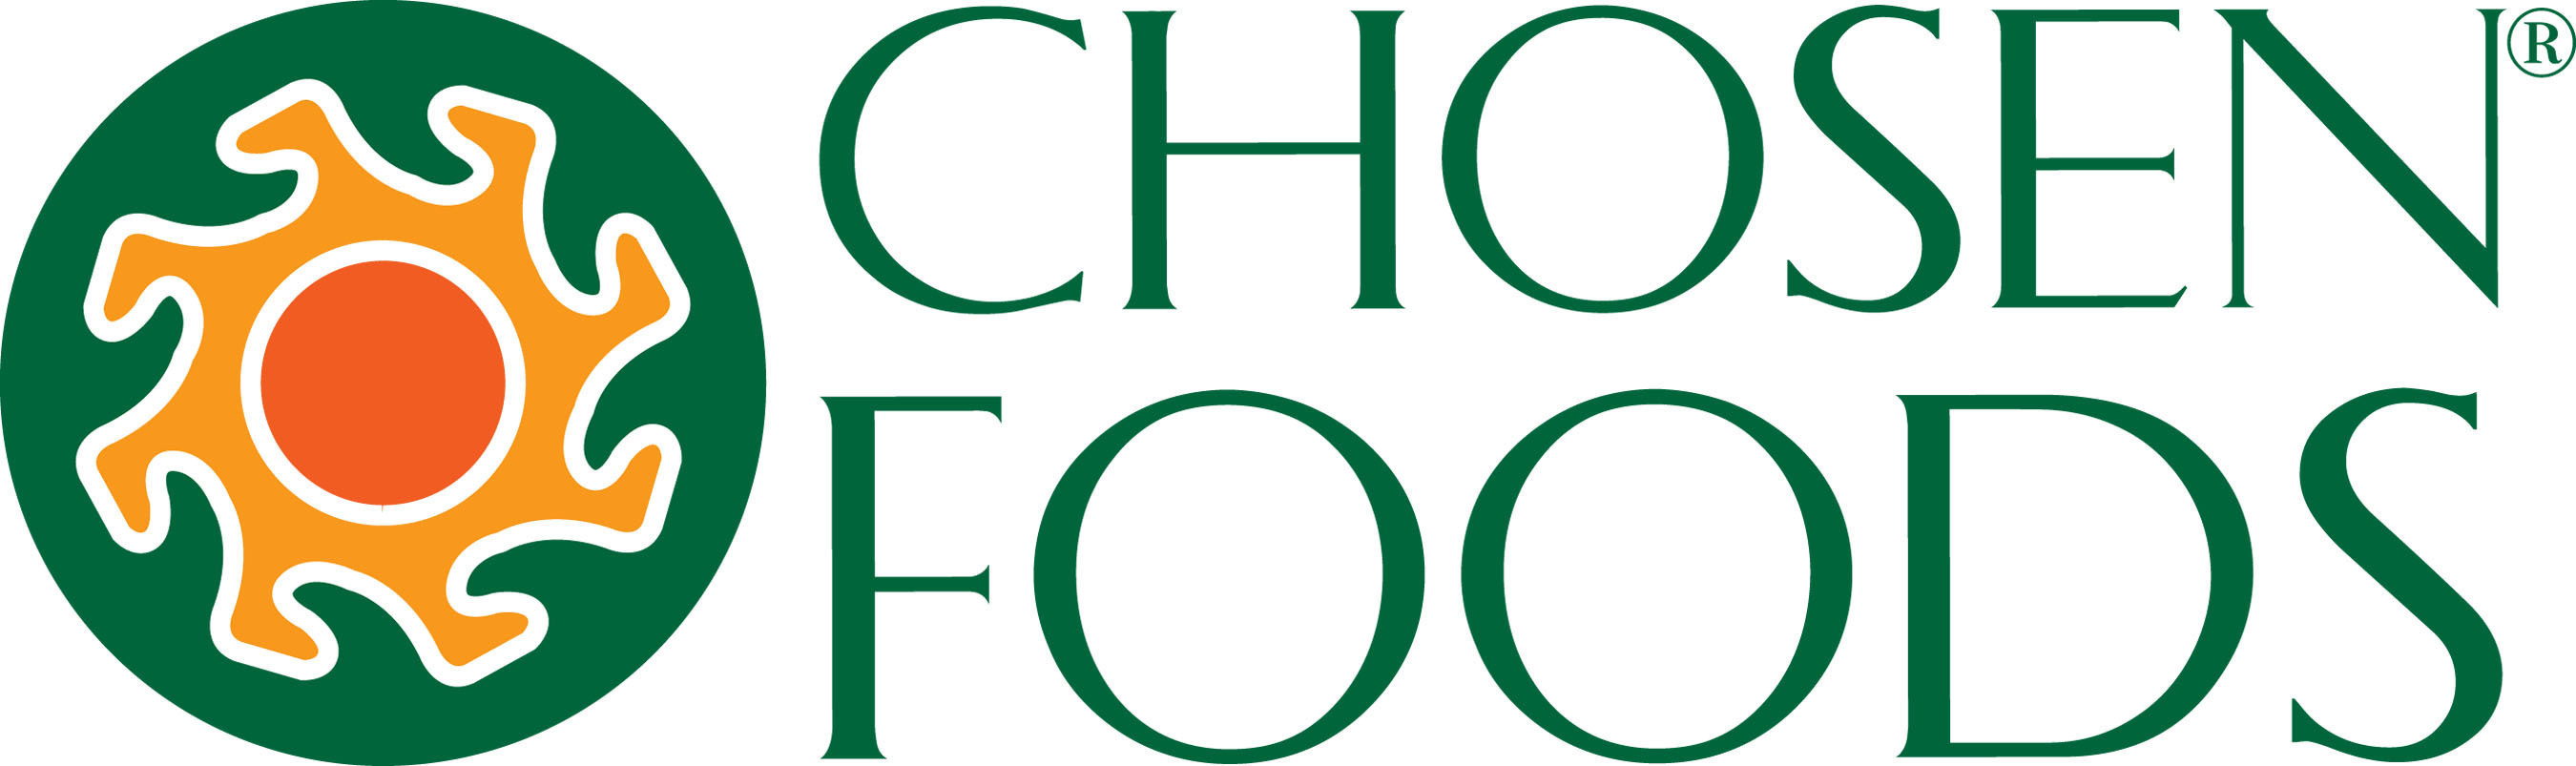 Chosen Foods logo. (PRNewsFoto/Chosen Foods)